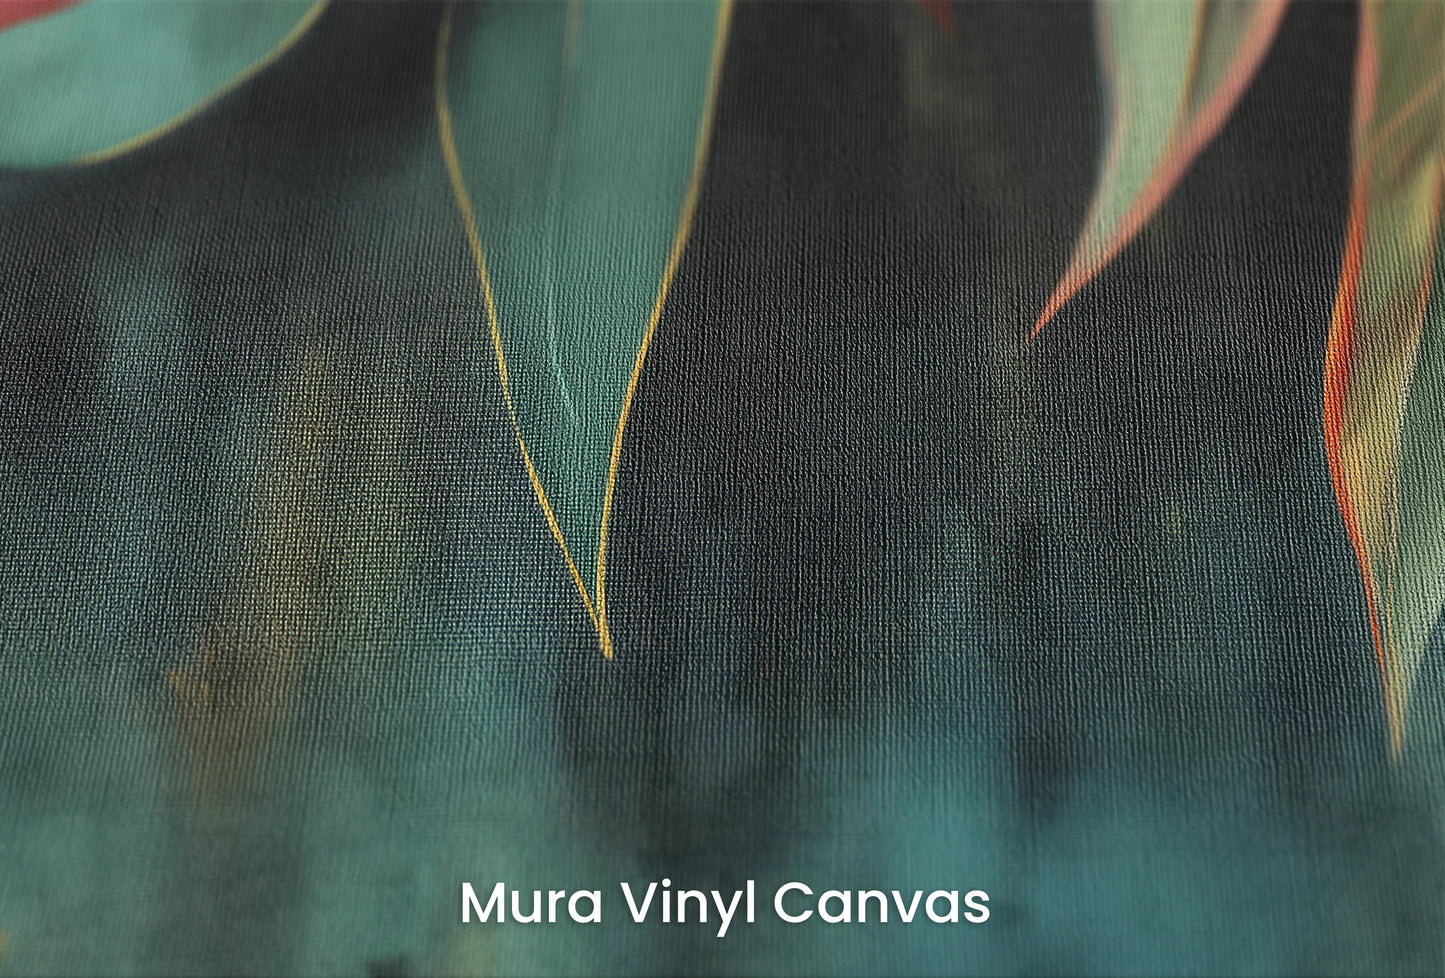 Zbliżenie na artystyczną fototapetę o nazwie Vibrant Fall na podłożu Mura Vinyl Canvas - faktura naturalnego płótna.